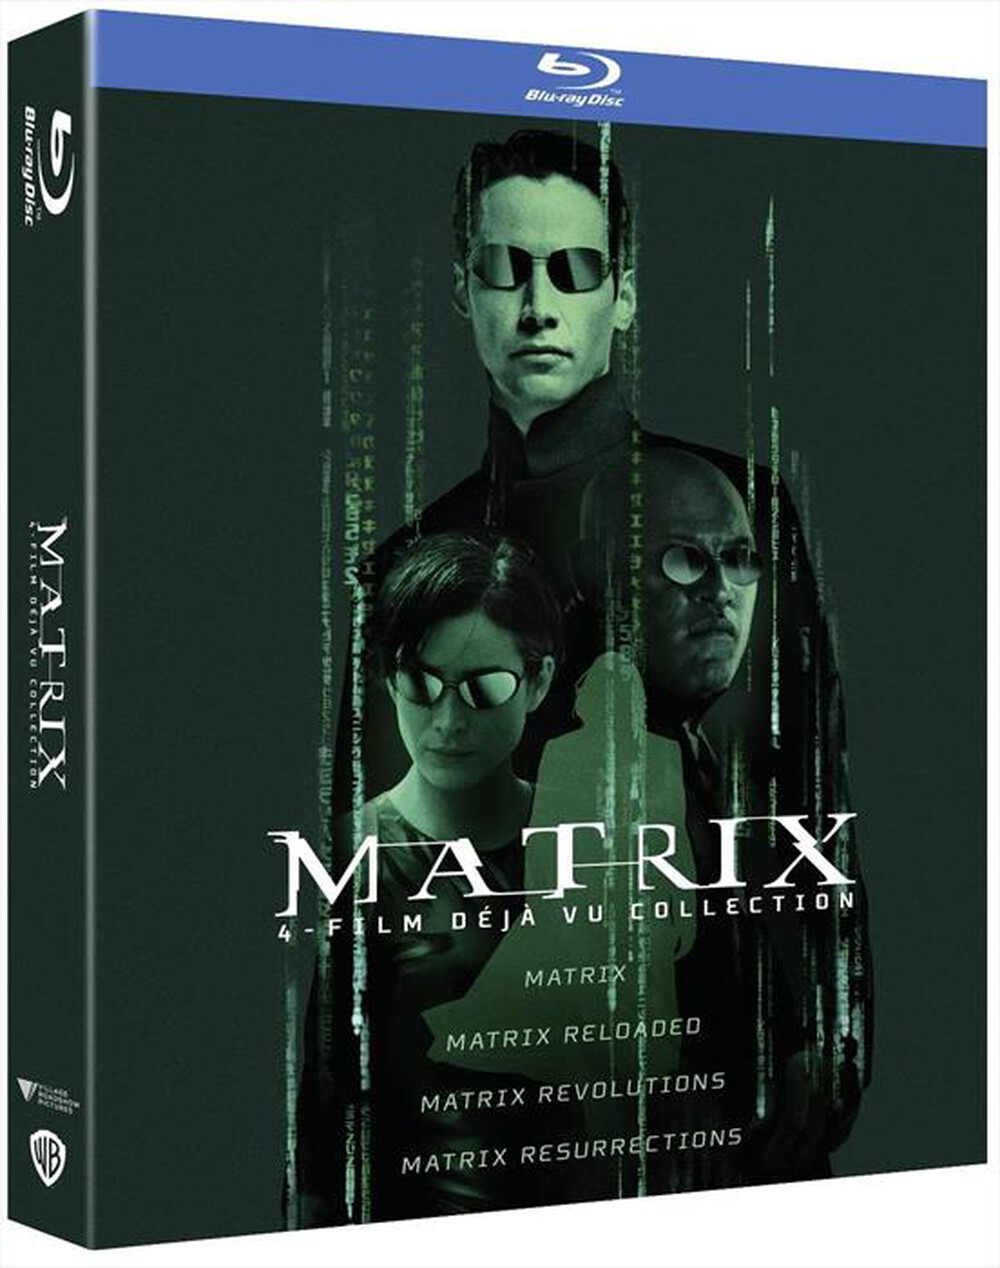 "WARNER HOME VIDEO - Matrix 4 Film Deja-Vu Collection (4 Blu-Ray)"